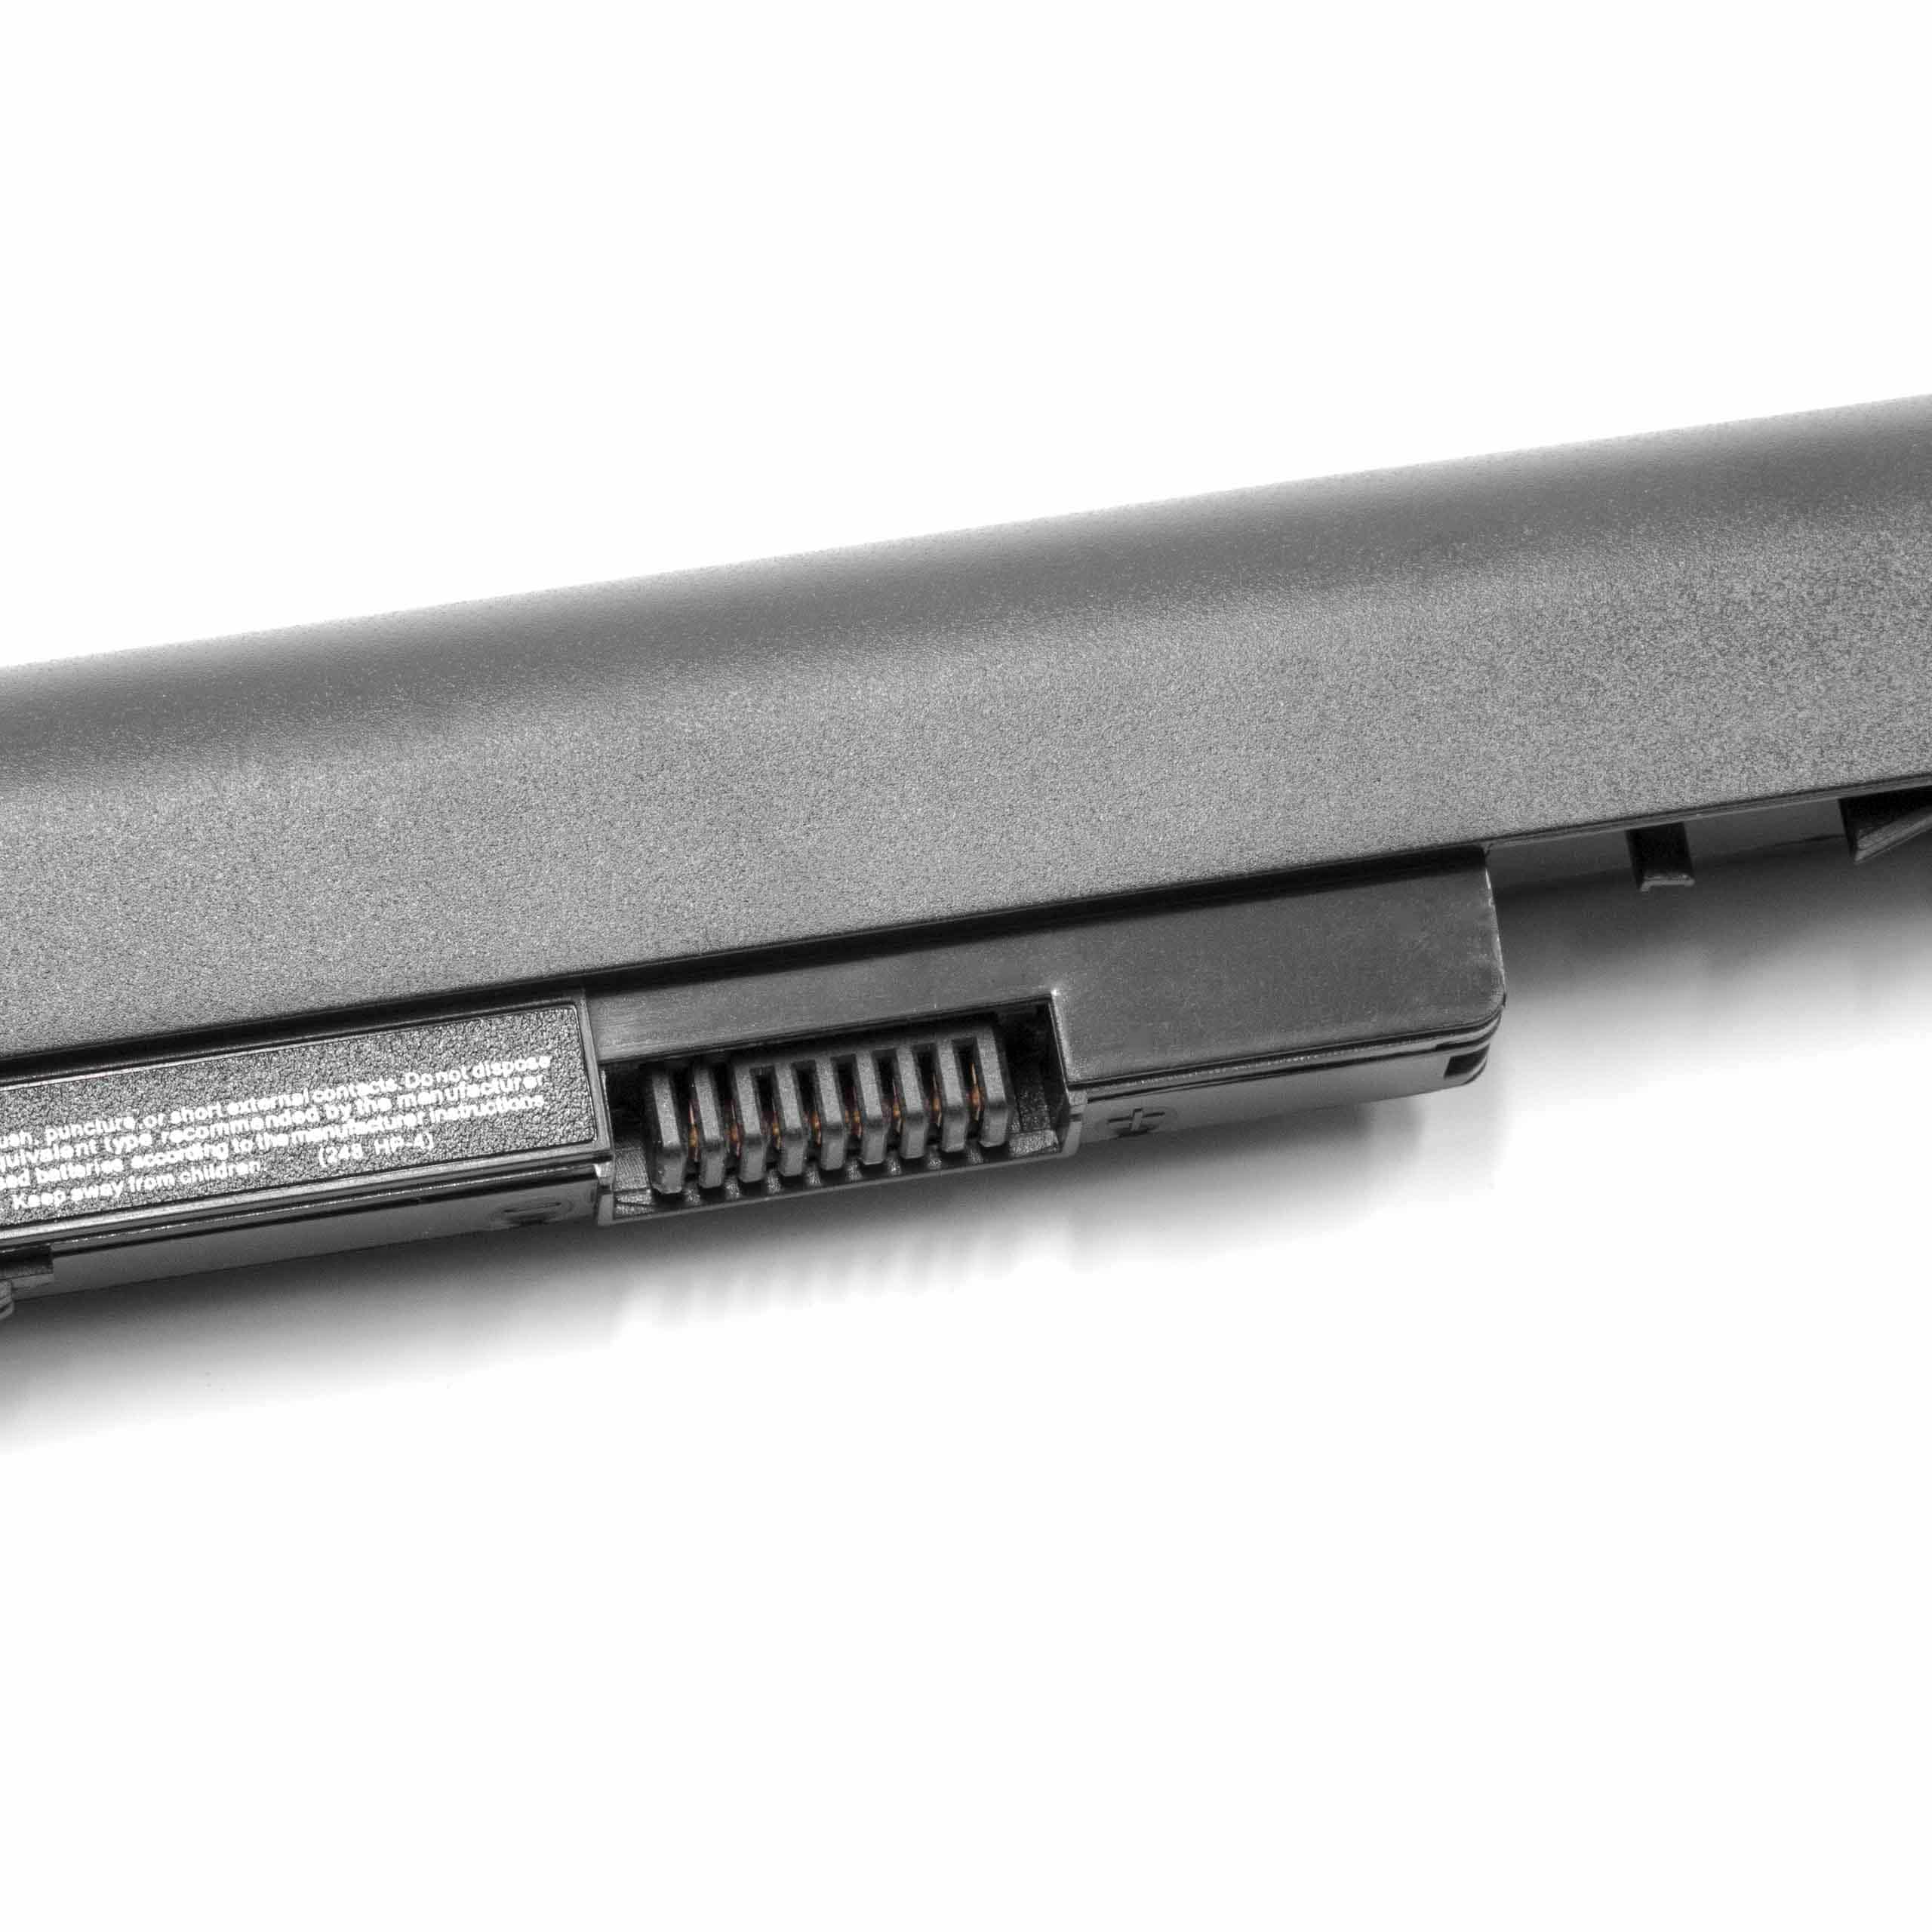 Akumulator do laptopa zamiennik HP 728248-221, 728248-141, 728248-121 - 2600 mAh 14,8 V Li-Ion, czarny